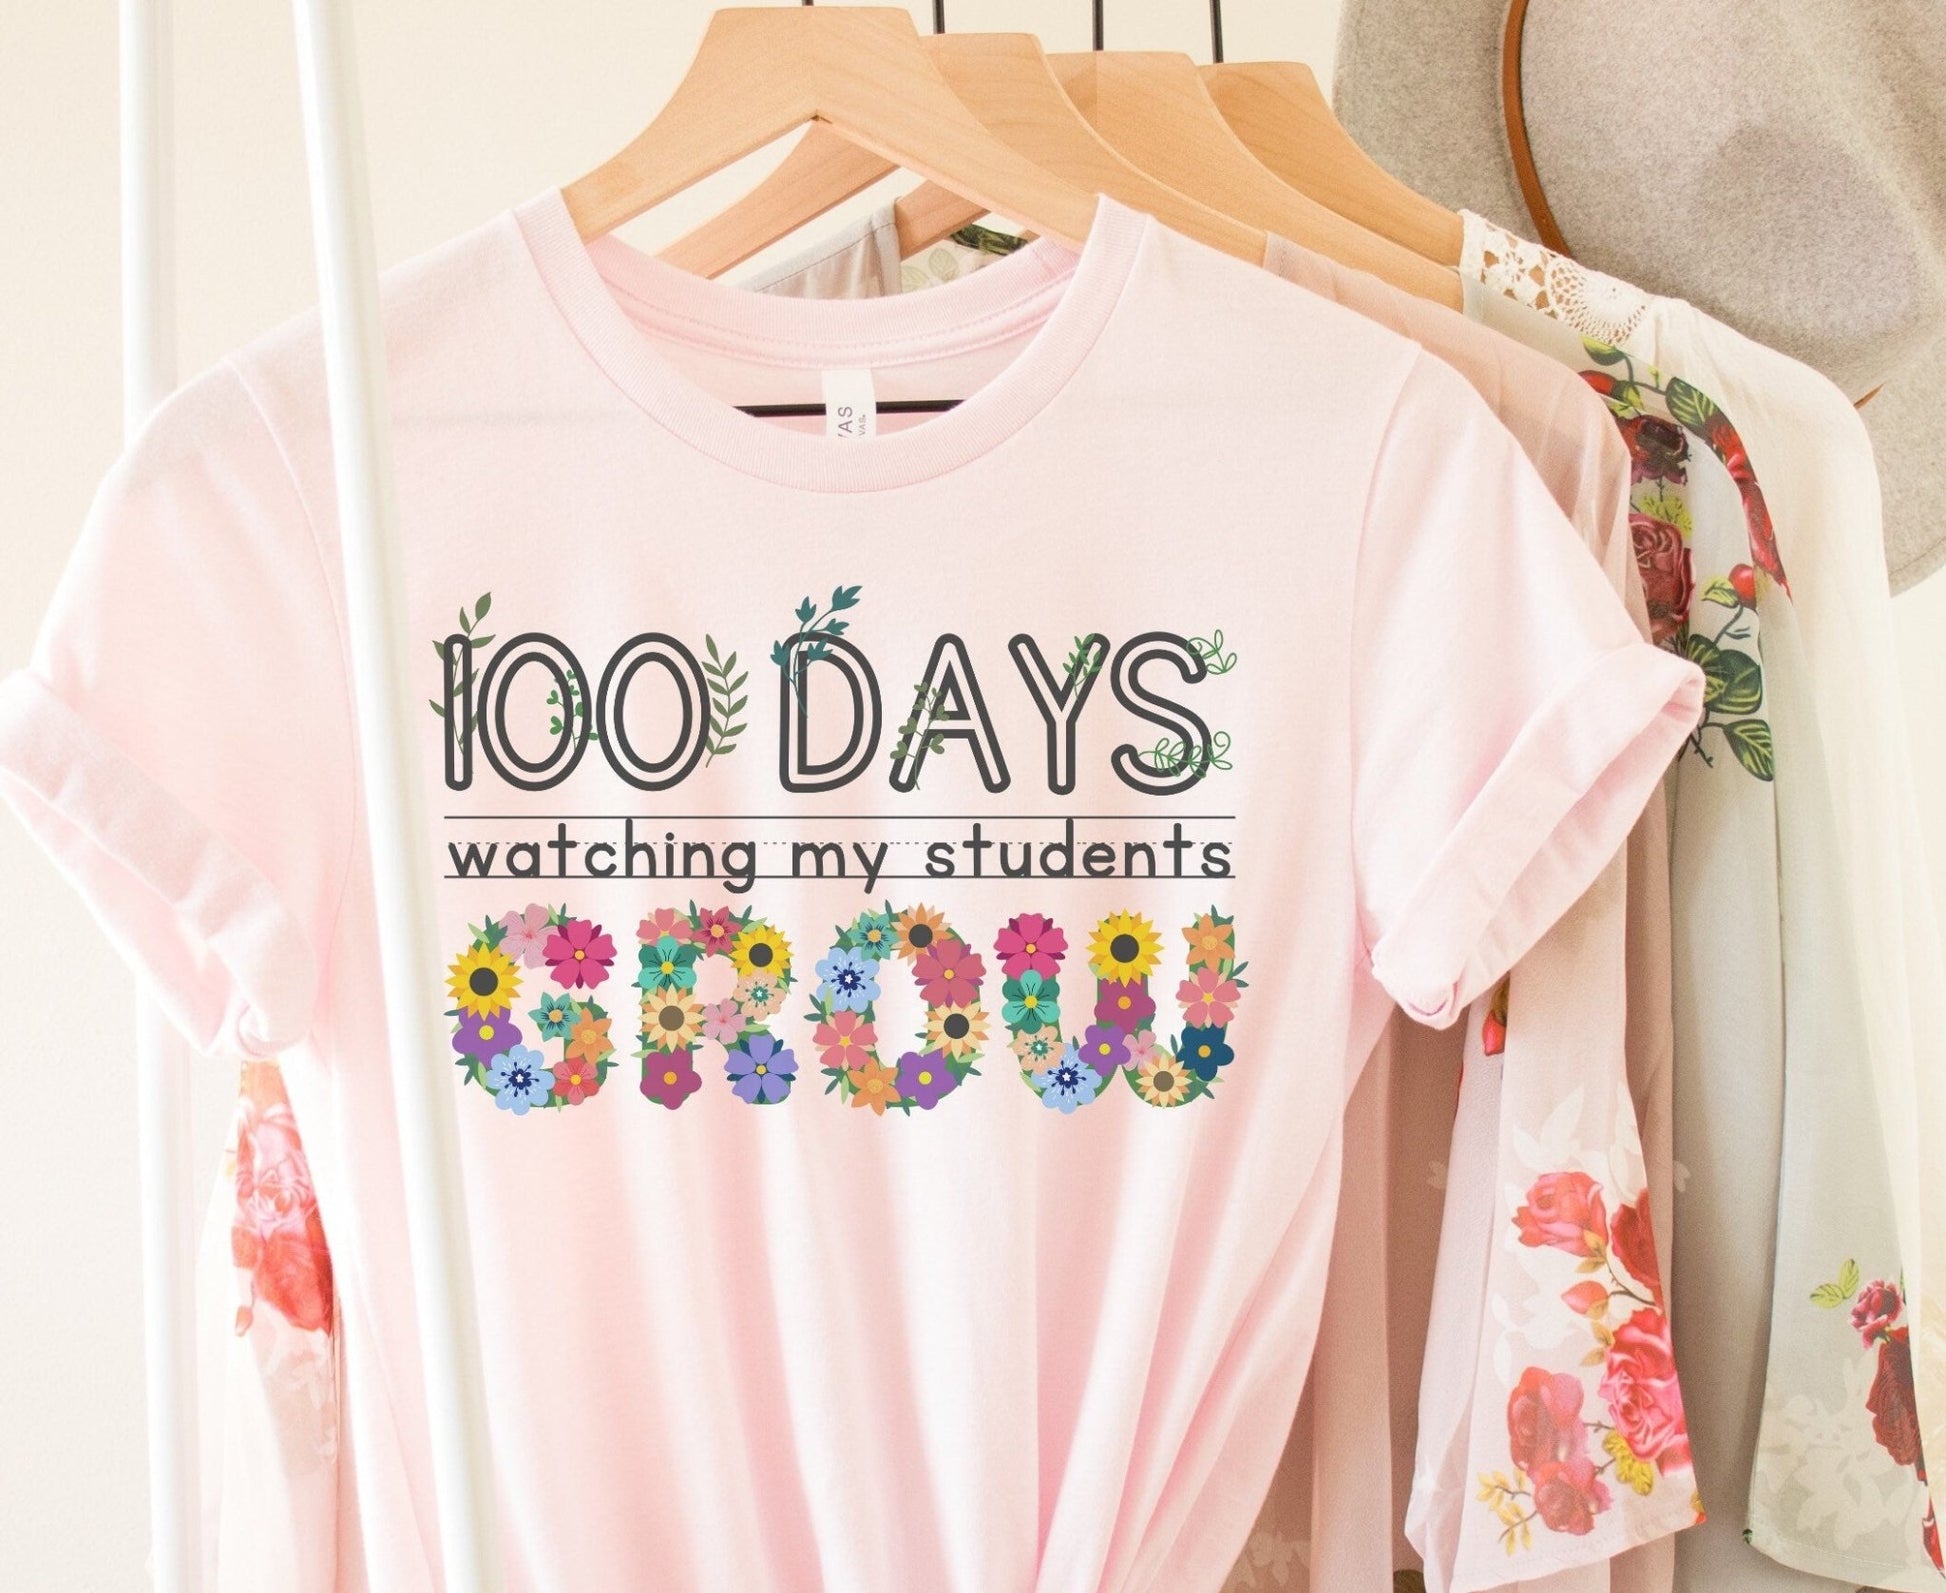 100 Days Watching My Students Grow Tshirt